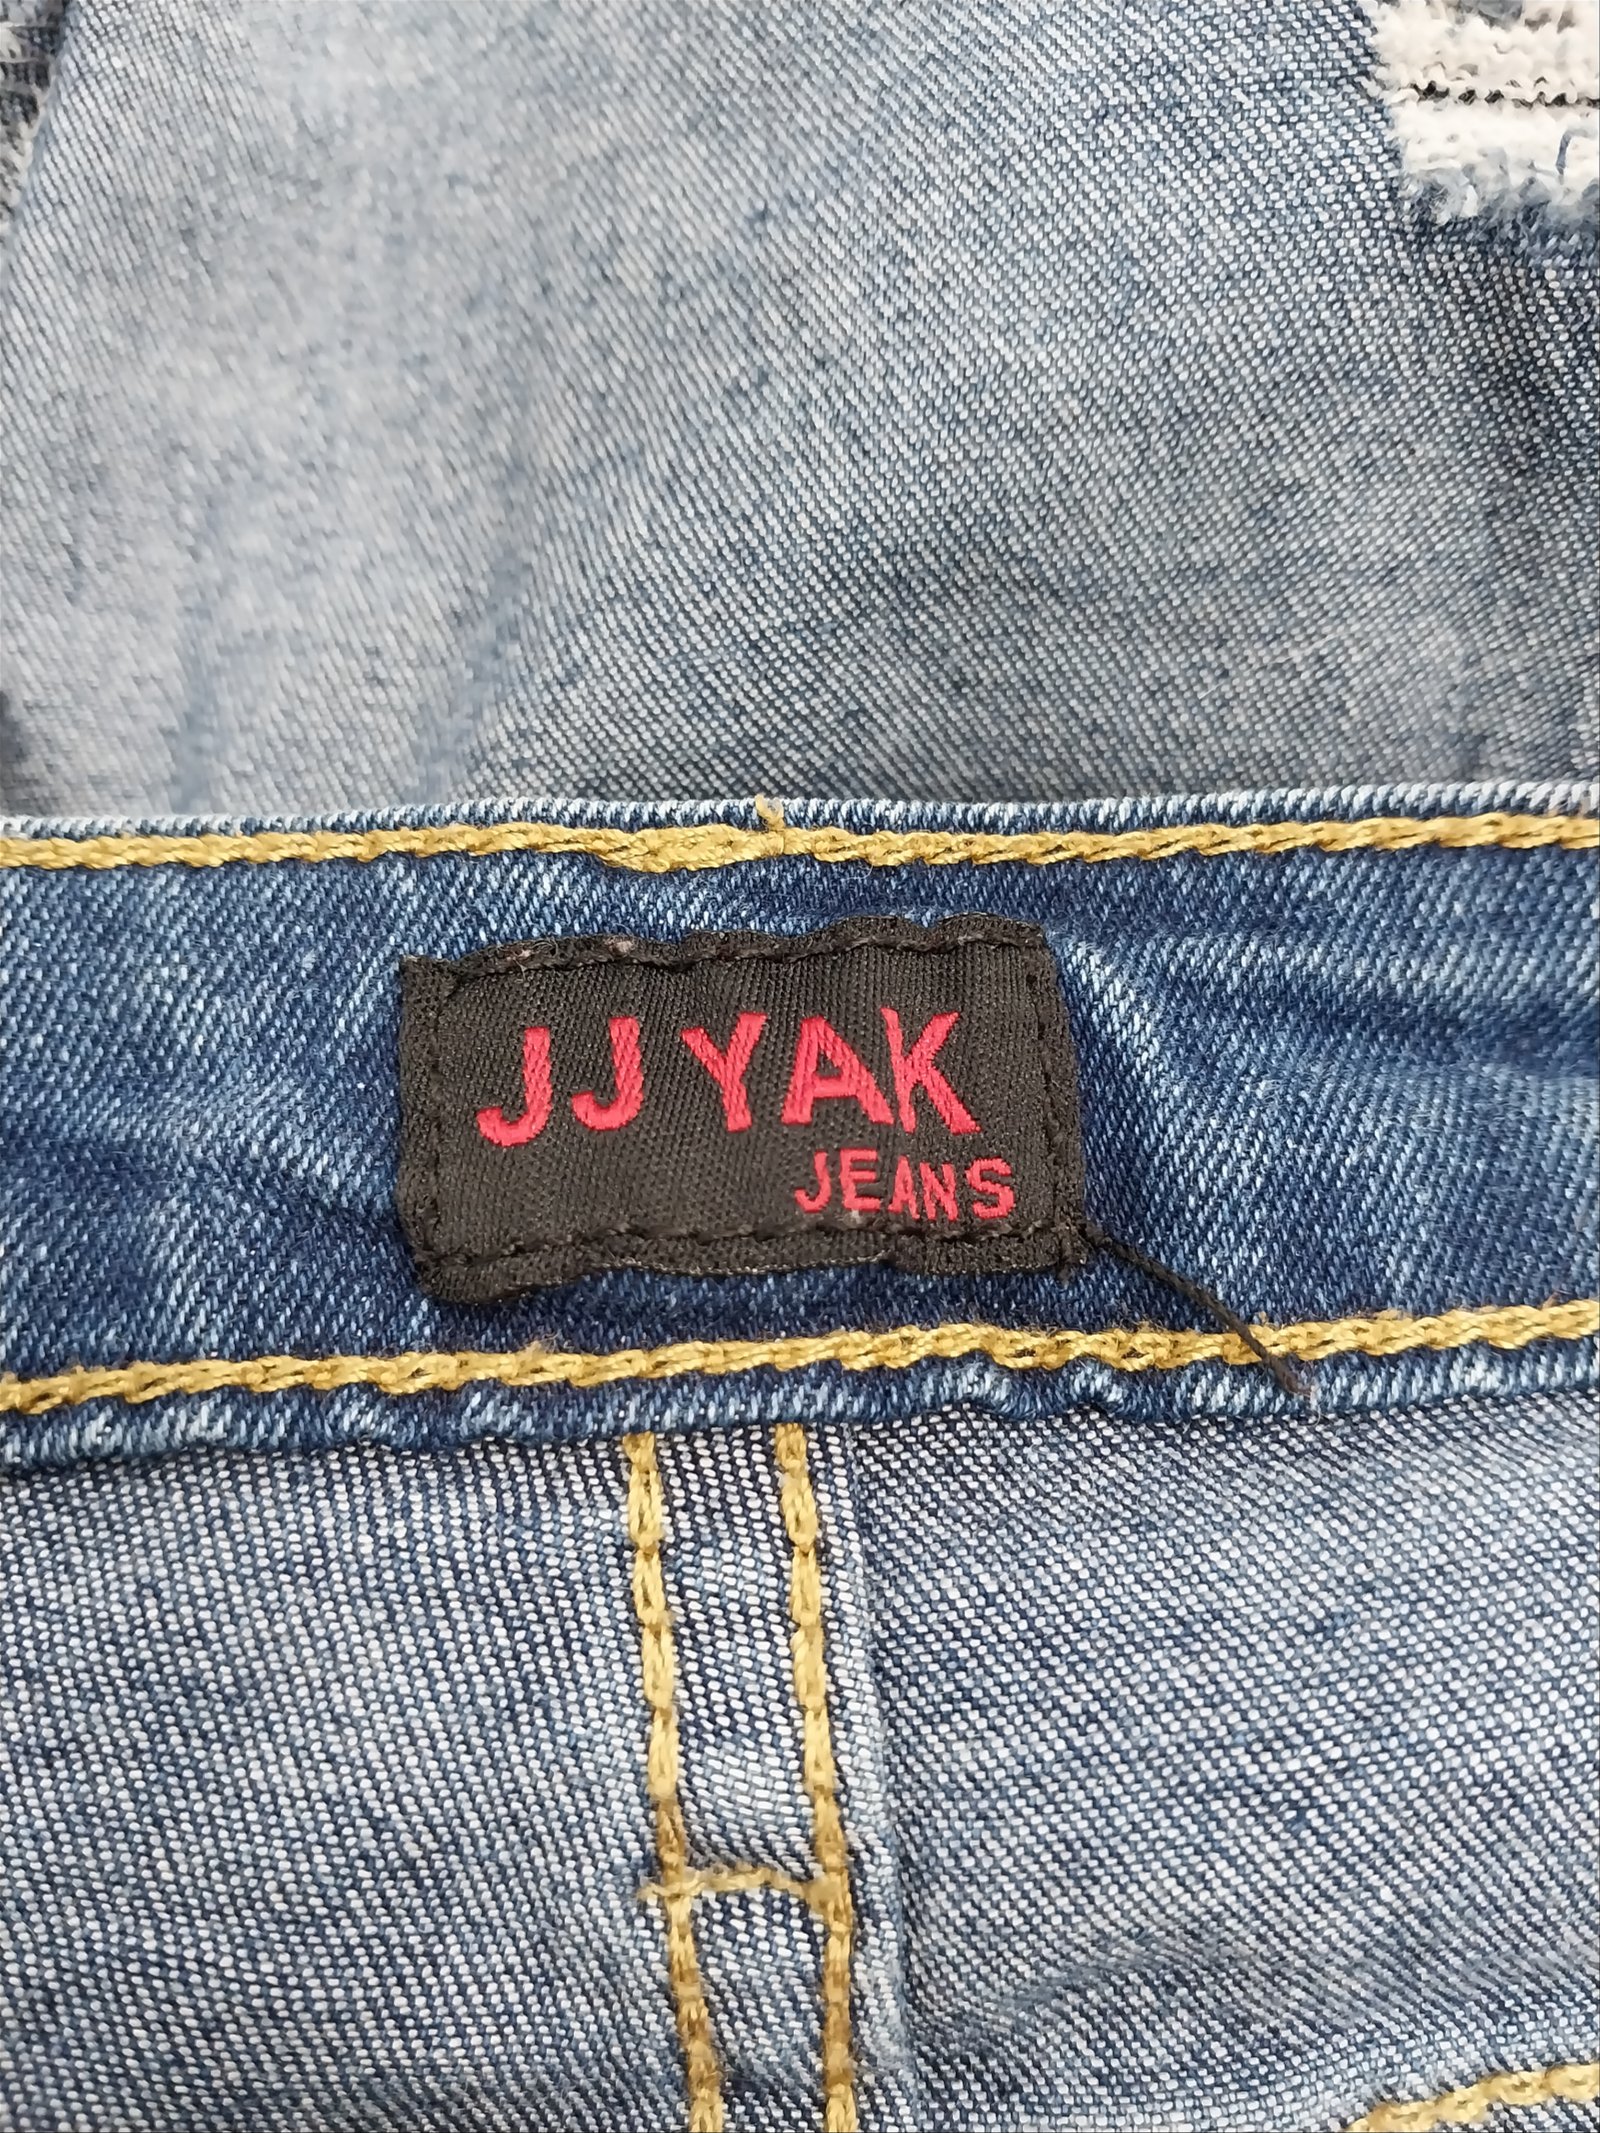 Jeans Skinny JJ yak